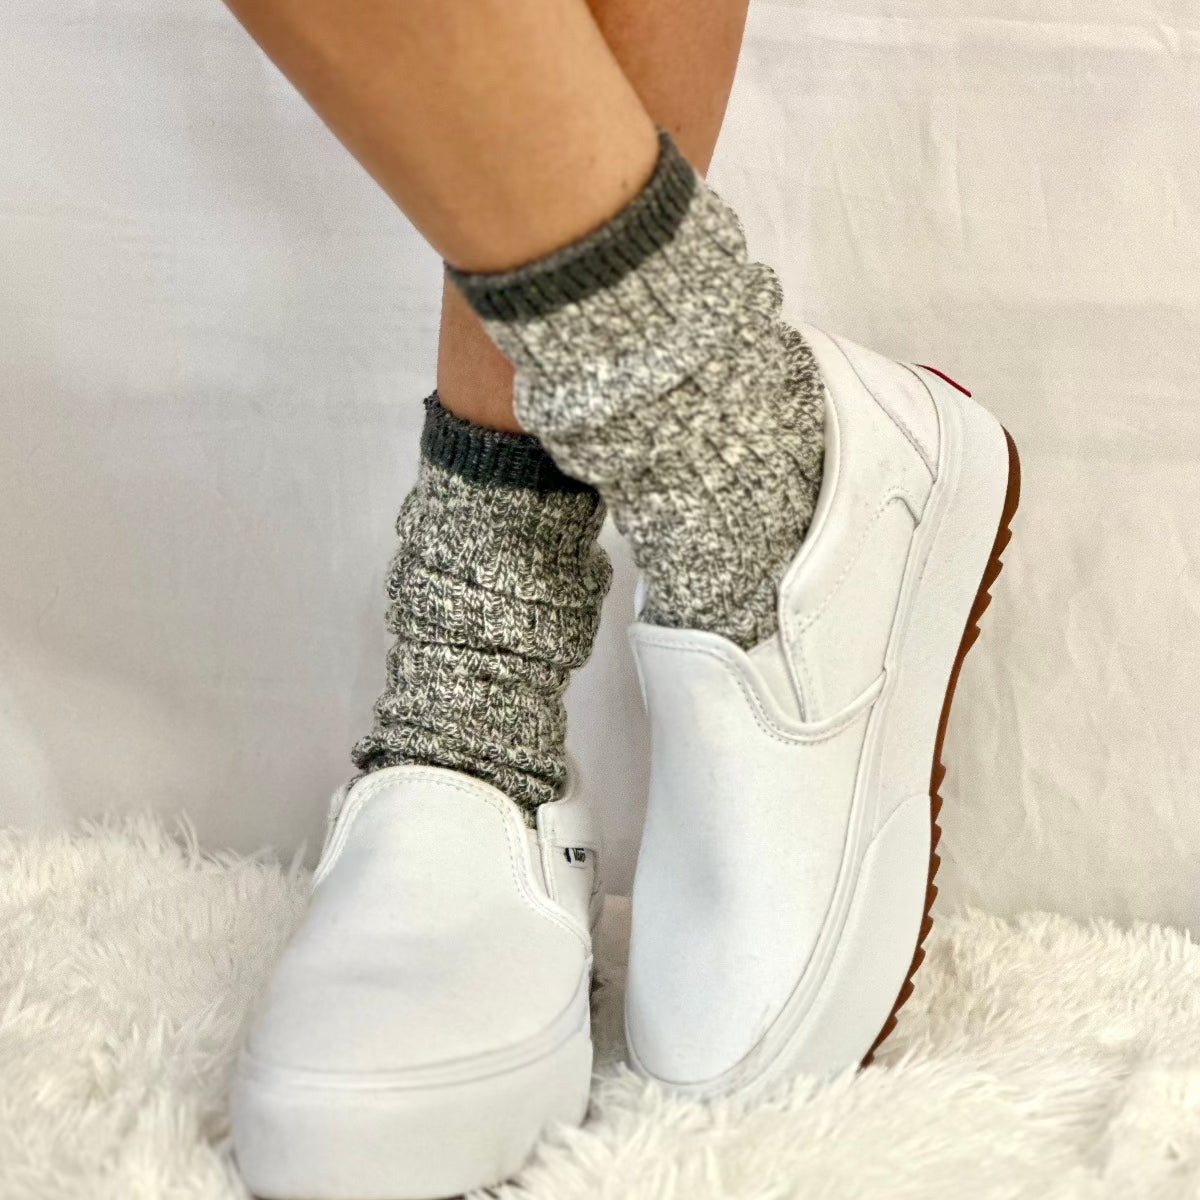 grey cotton marrled best short boot socks women, cute fashion crew boot socks